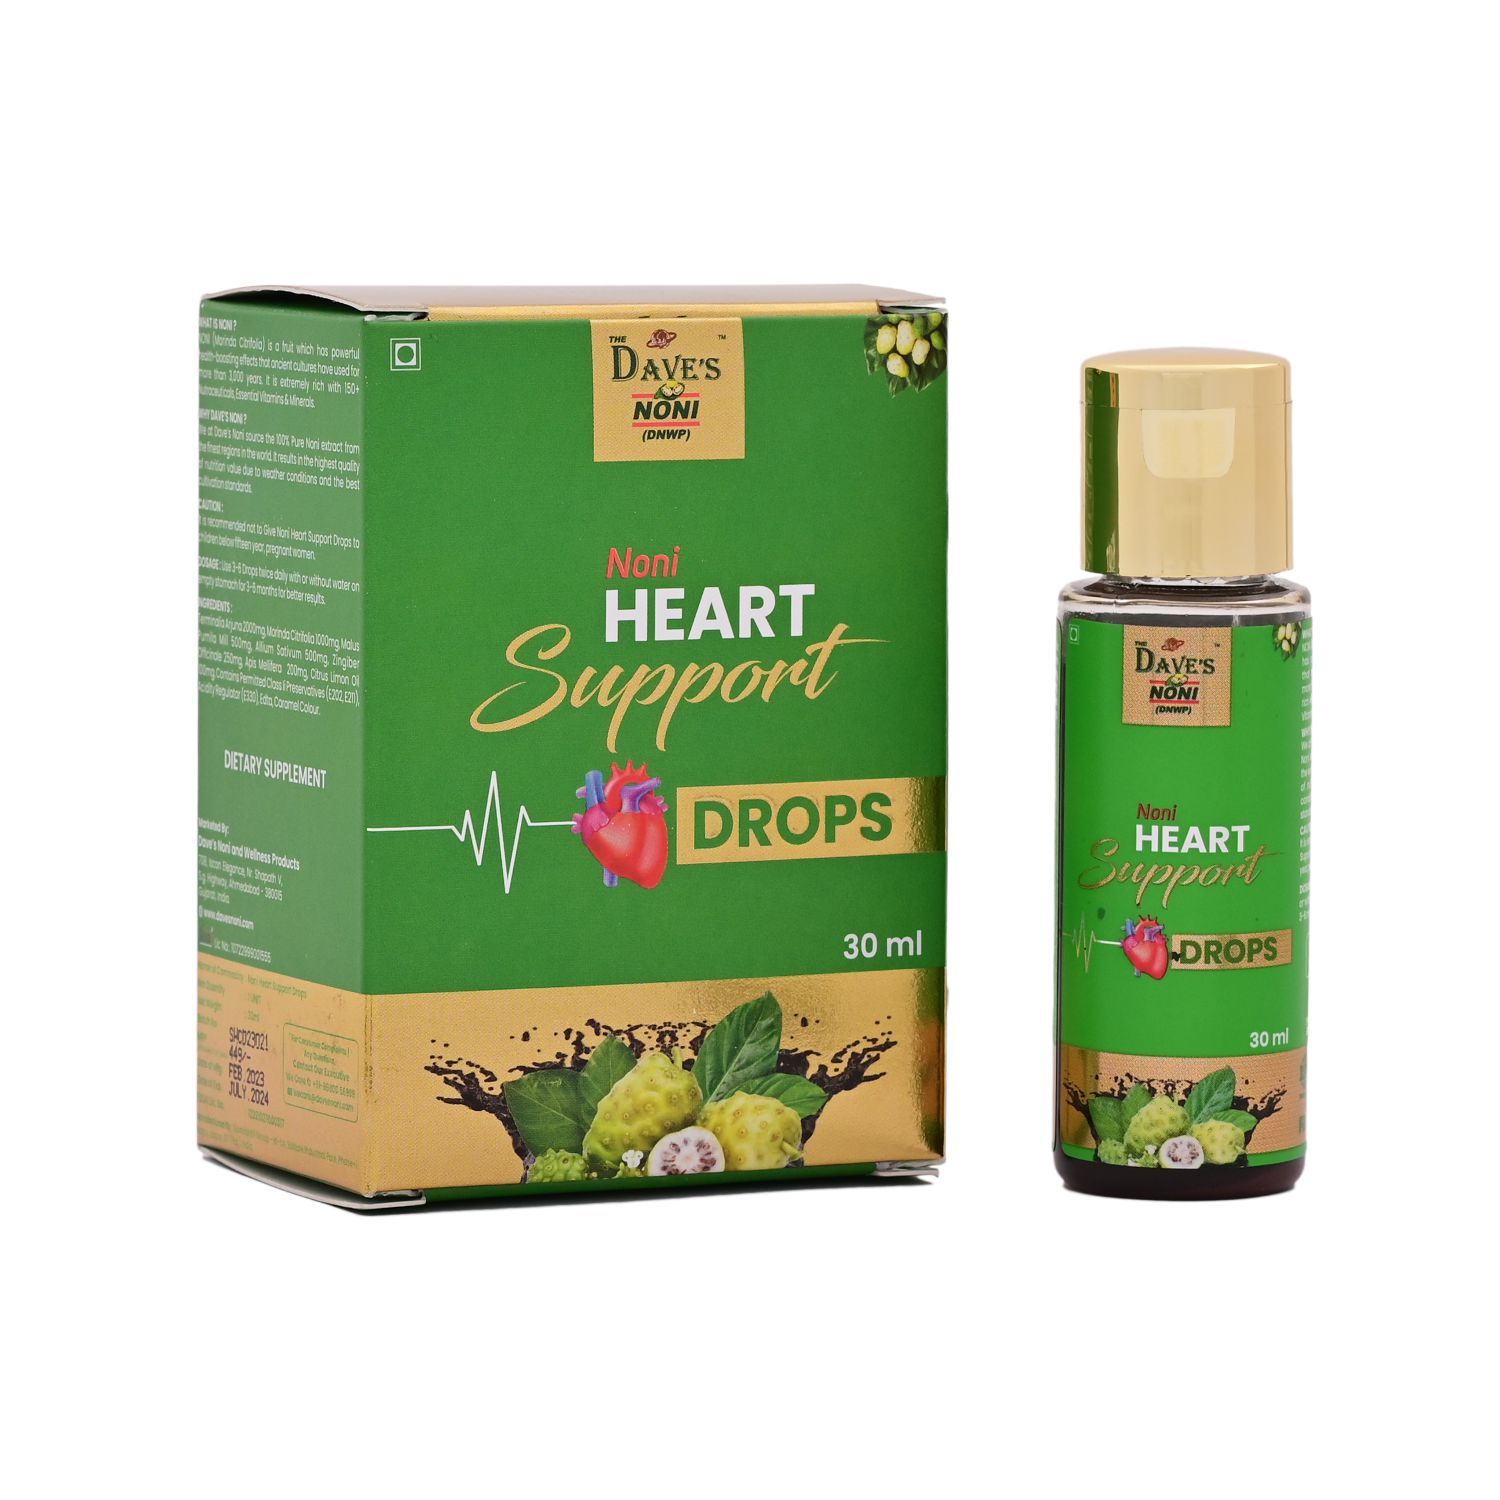 The Dave's Noni Heart Support Drops for Cardiac Wellness & Cholesterol Control, Noni Immunity Booster Drops-30ML